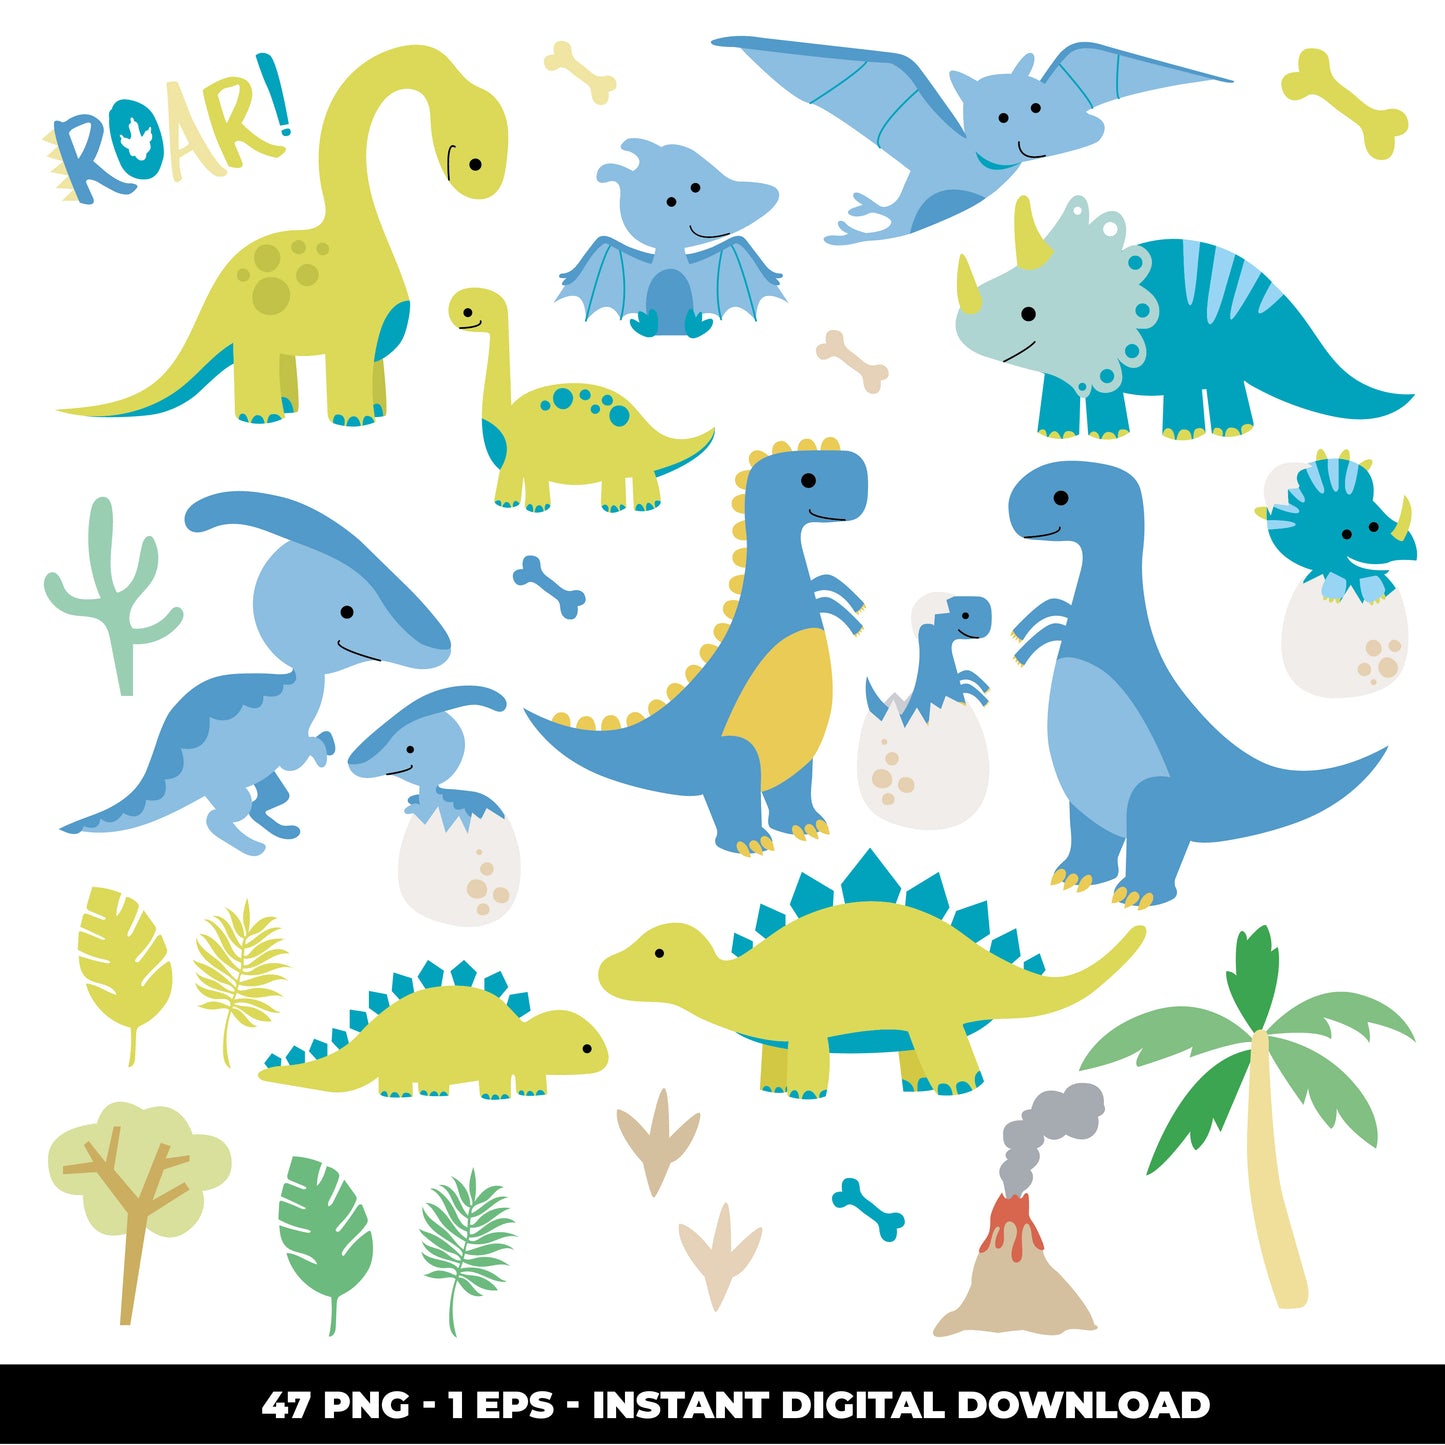 COD794 - Dinosaur clipart, kids dinosaur clipart, t-rex clipart, dino clipart, triceratops clipart files